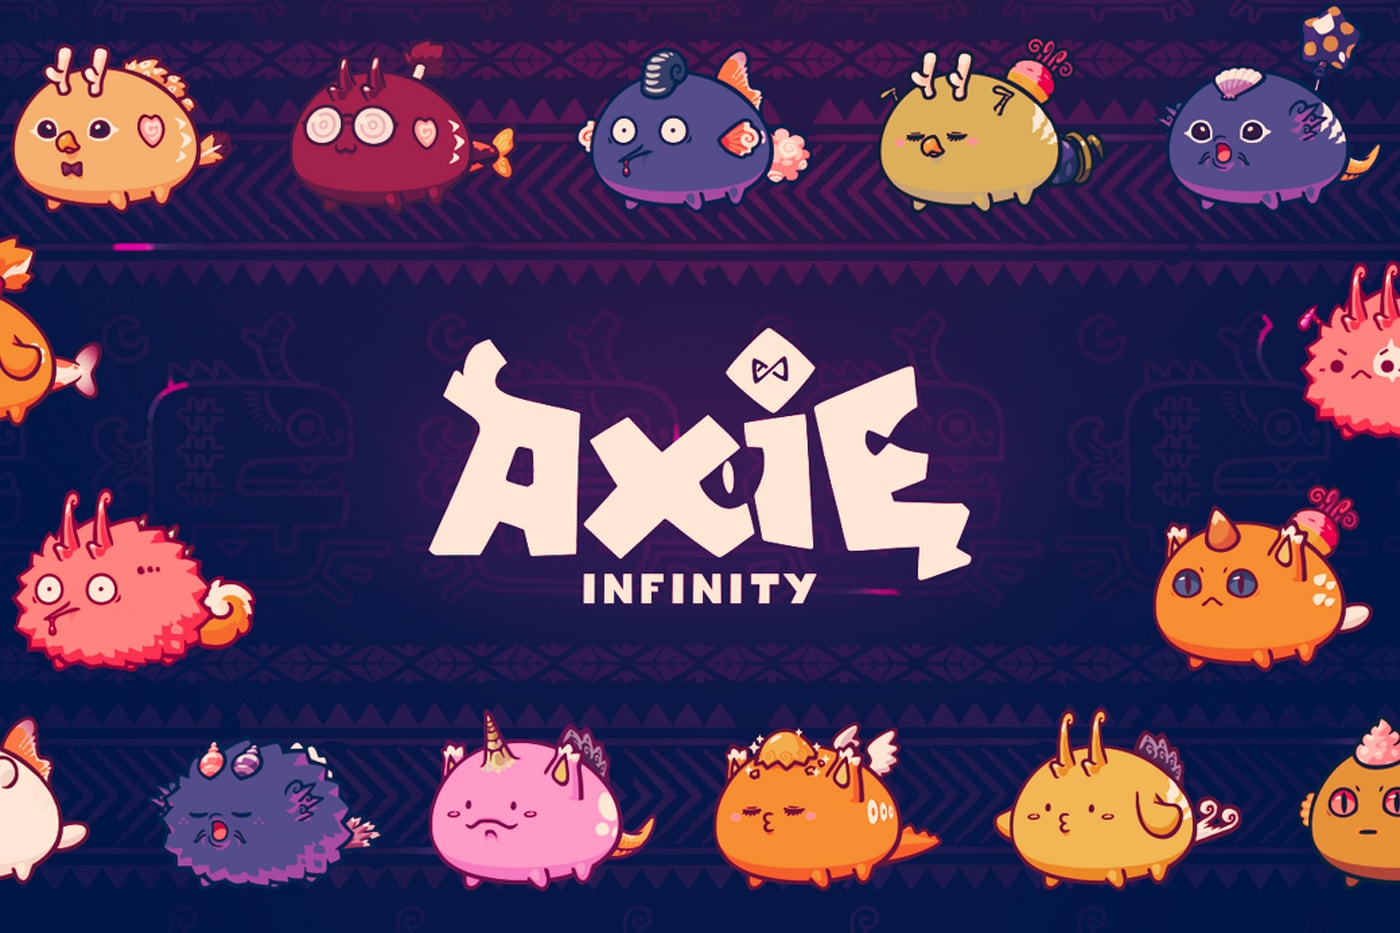 《Axie Infinity》成为首个销售额达 $11 亿美金 NFT 游戏